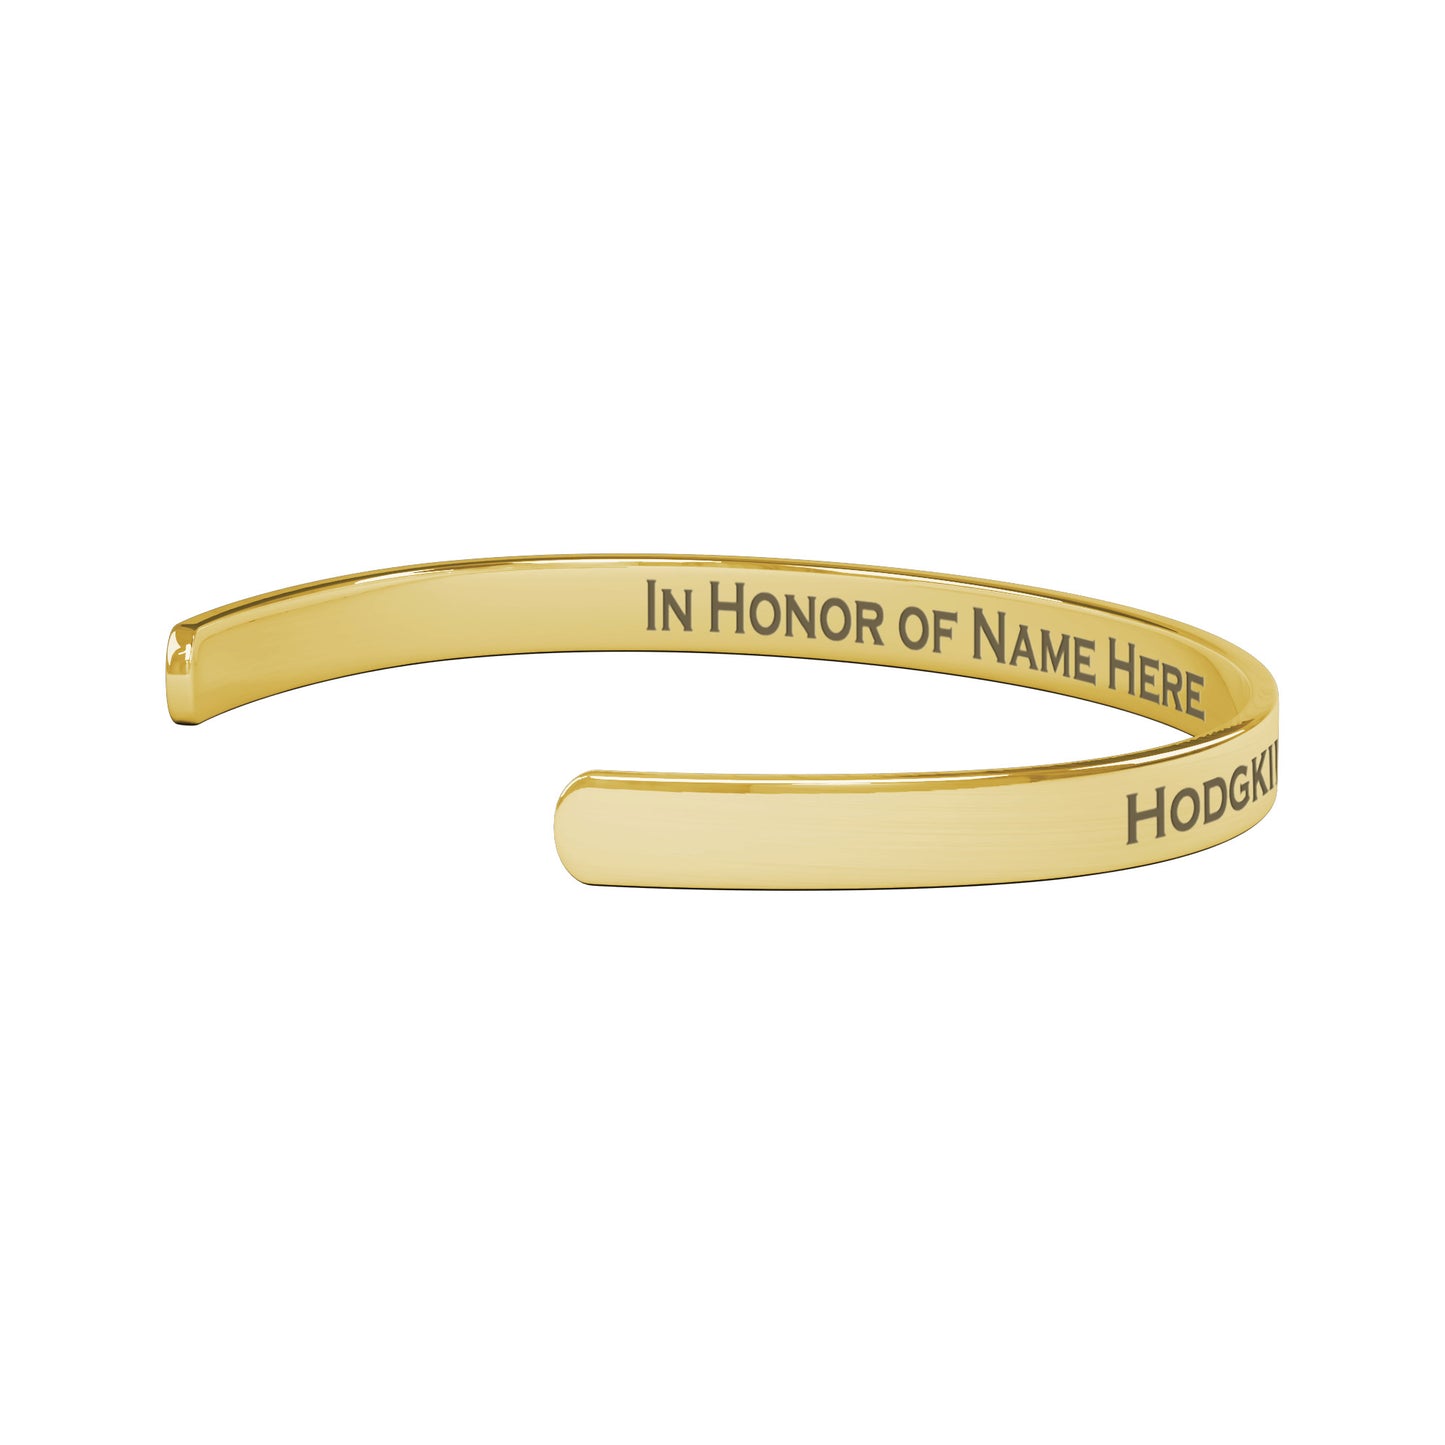 Personalized Hodgkin's Lymphoma Awareness Cuff Bracelet